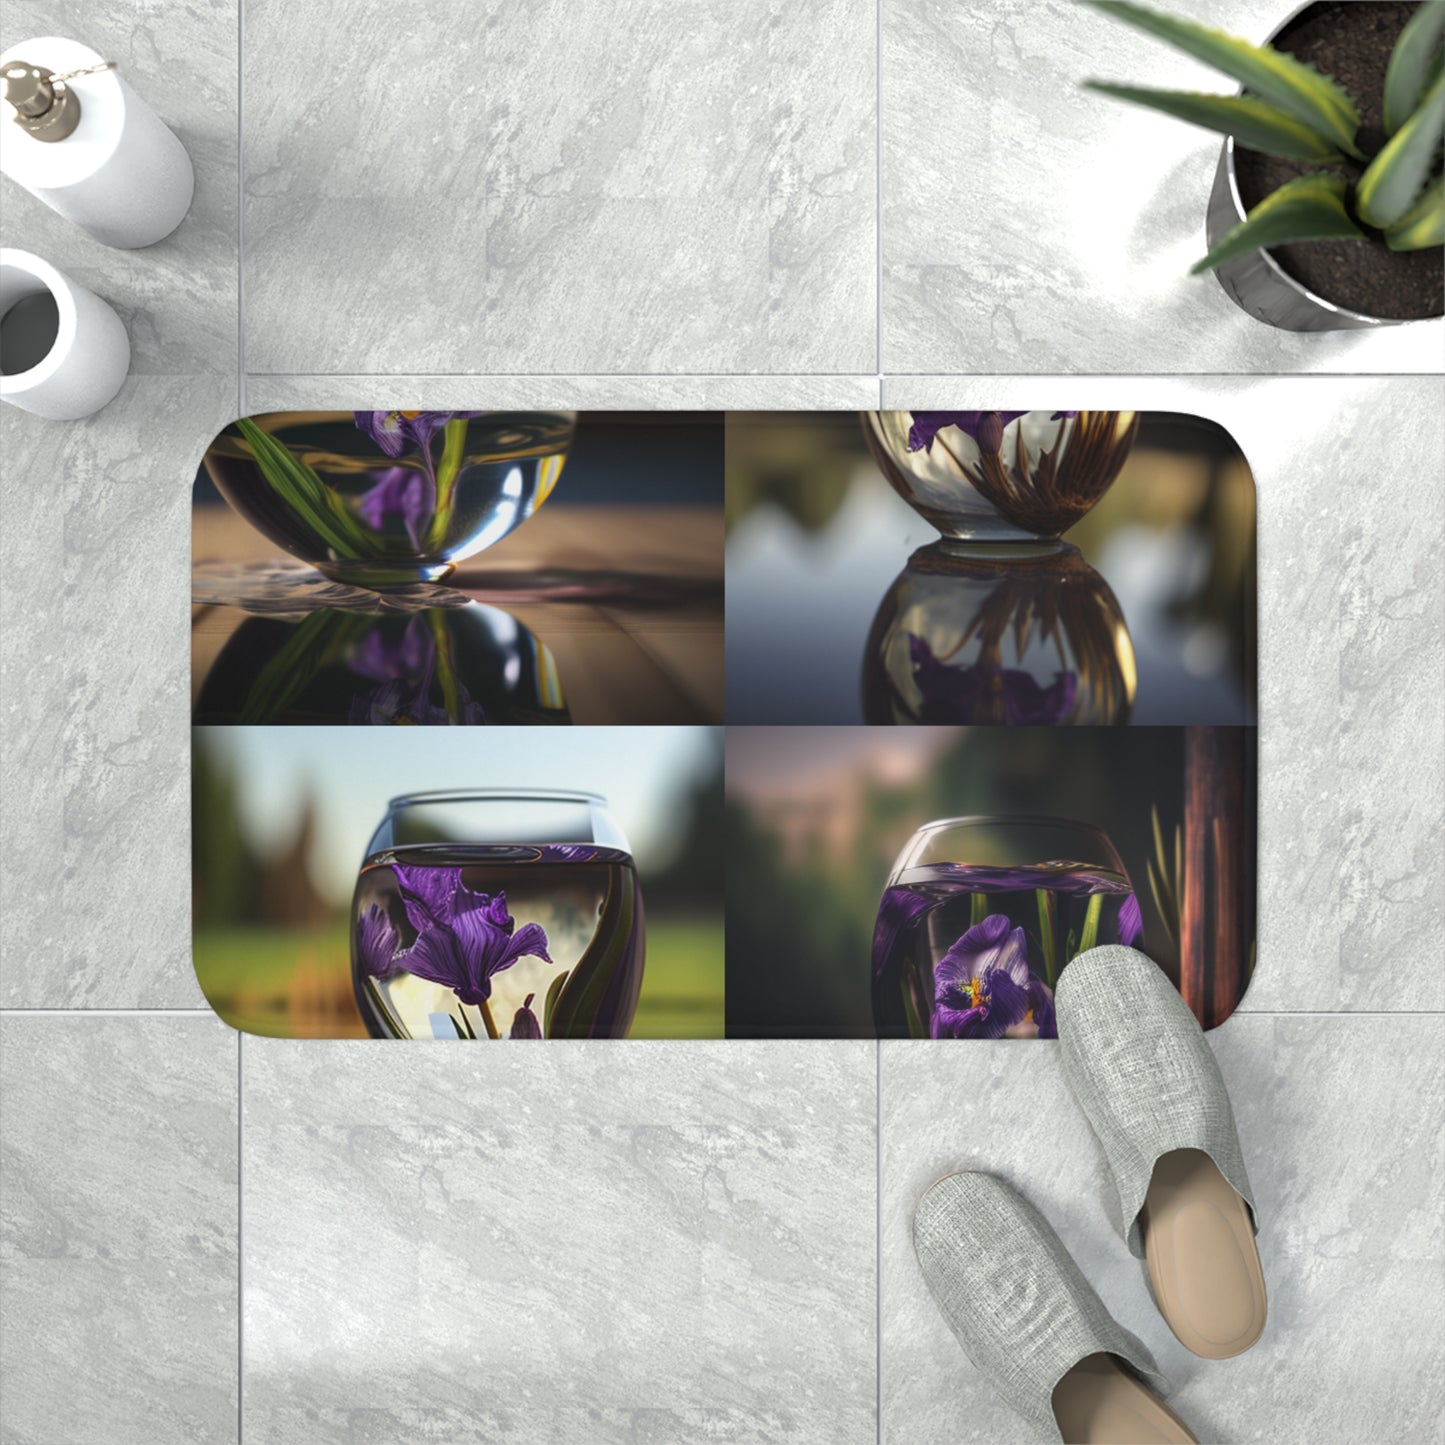 Memory Foam Bath Mat Purple Iris in a vase 5